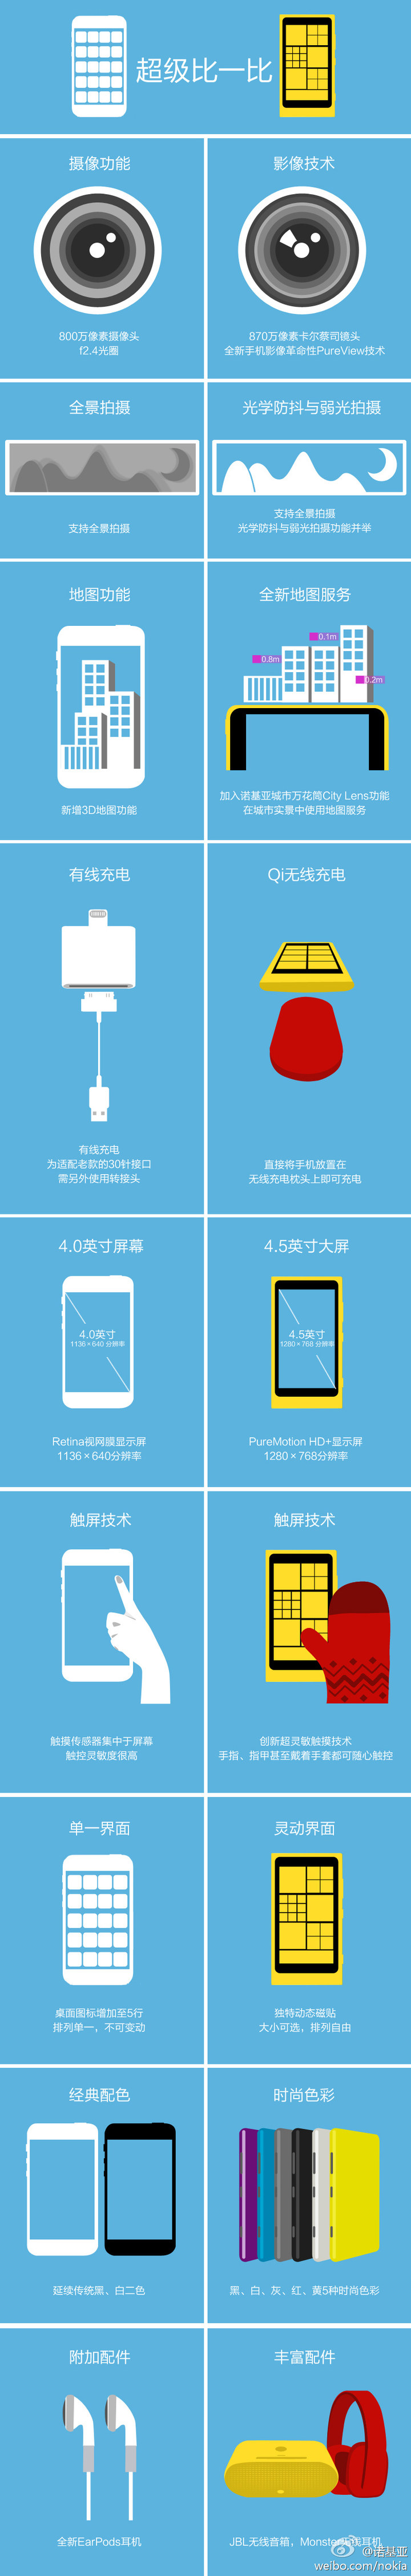 諾基亞Lumia920和蘋果iPhone5對比圖